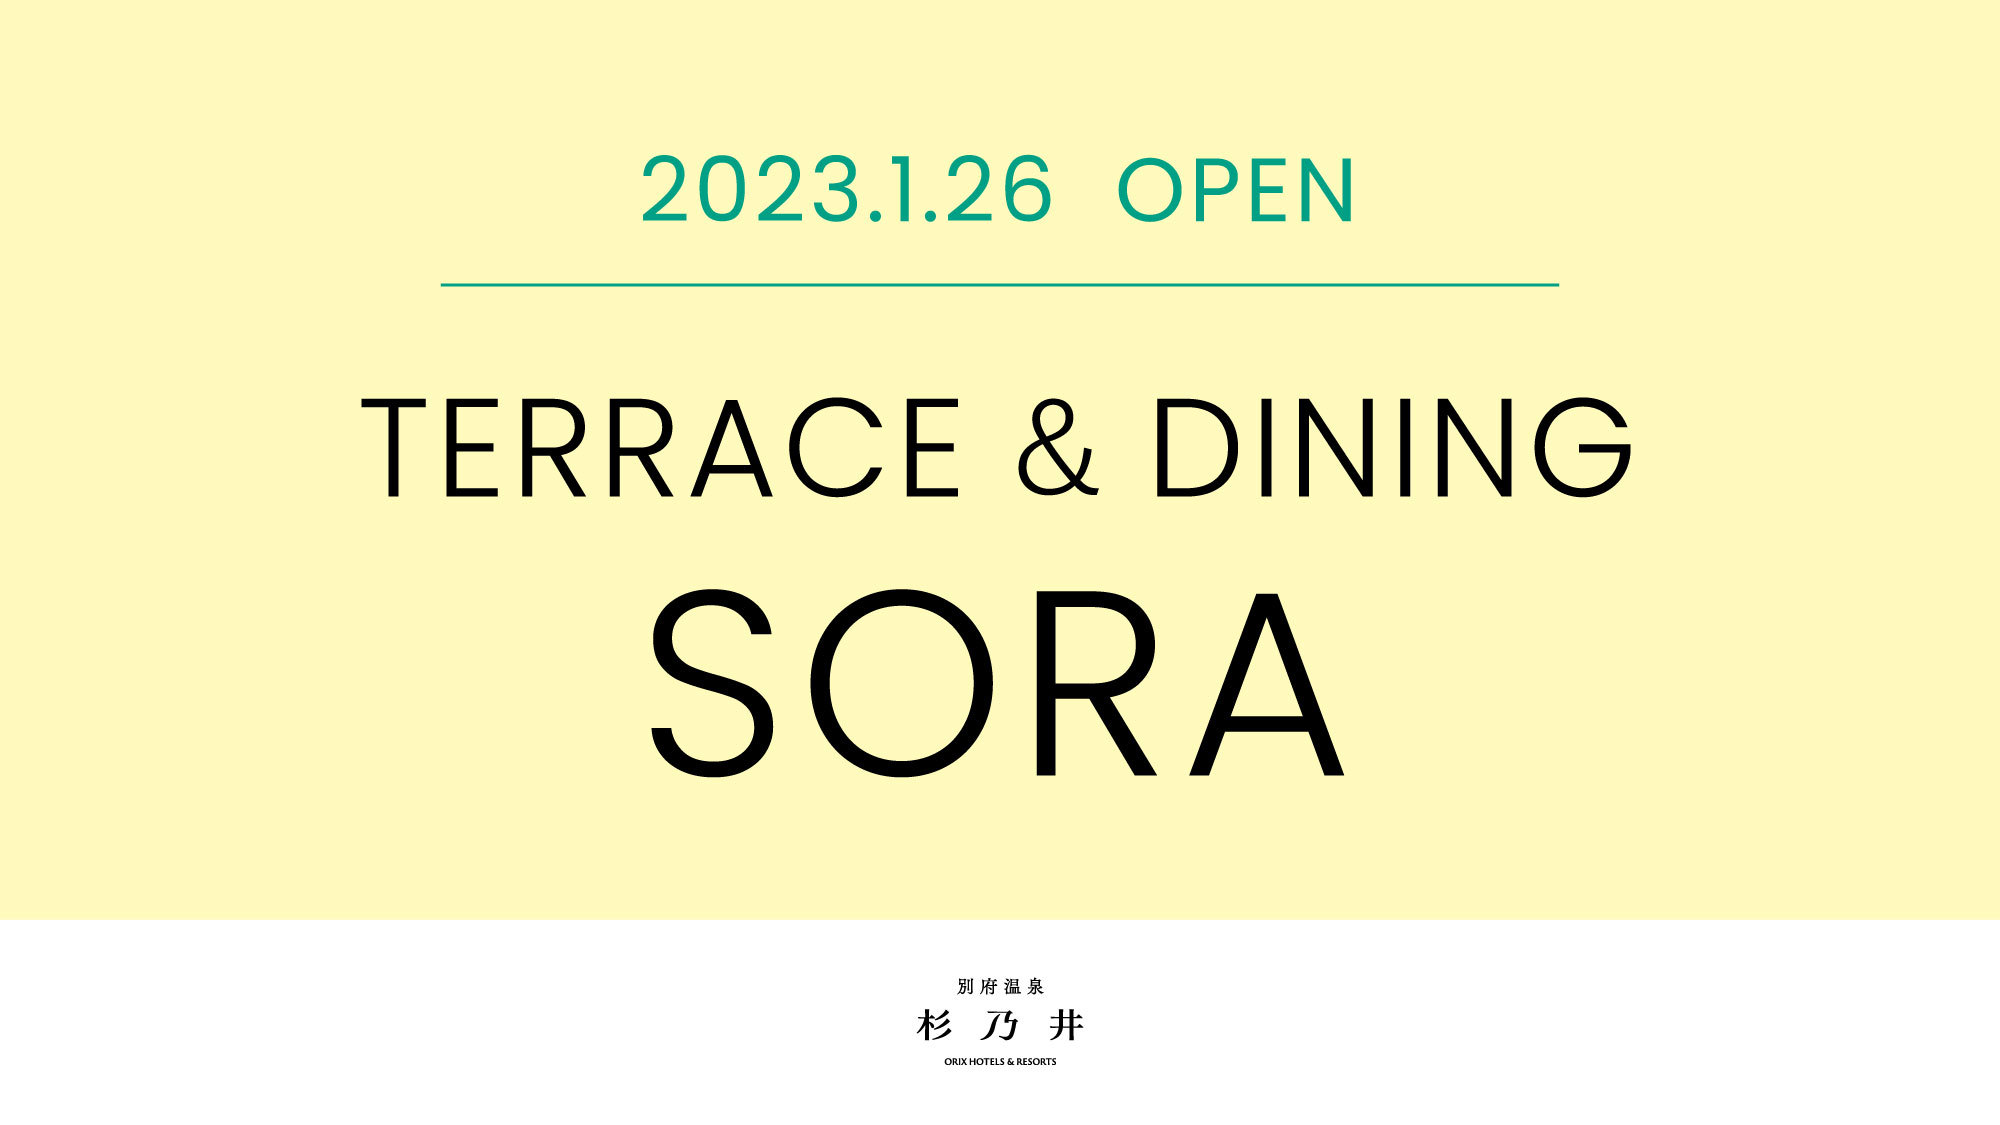 TERRACE & DINING SORA